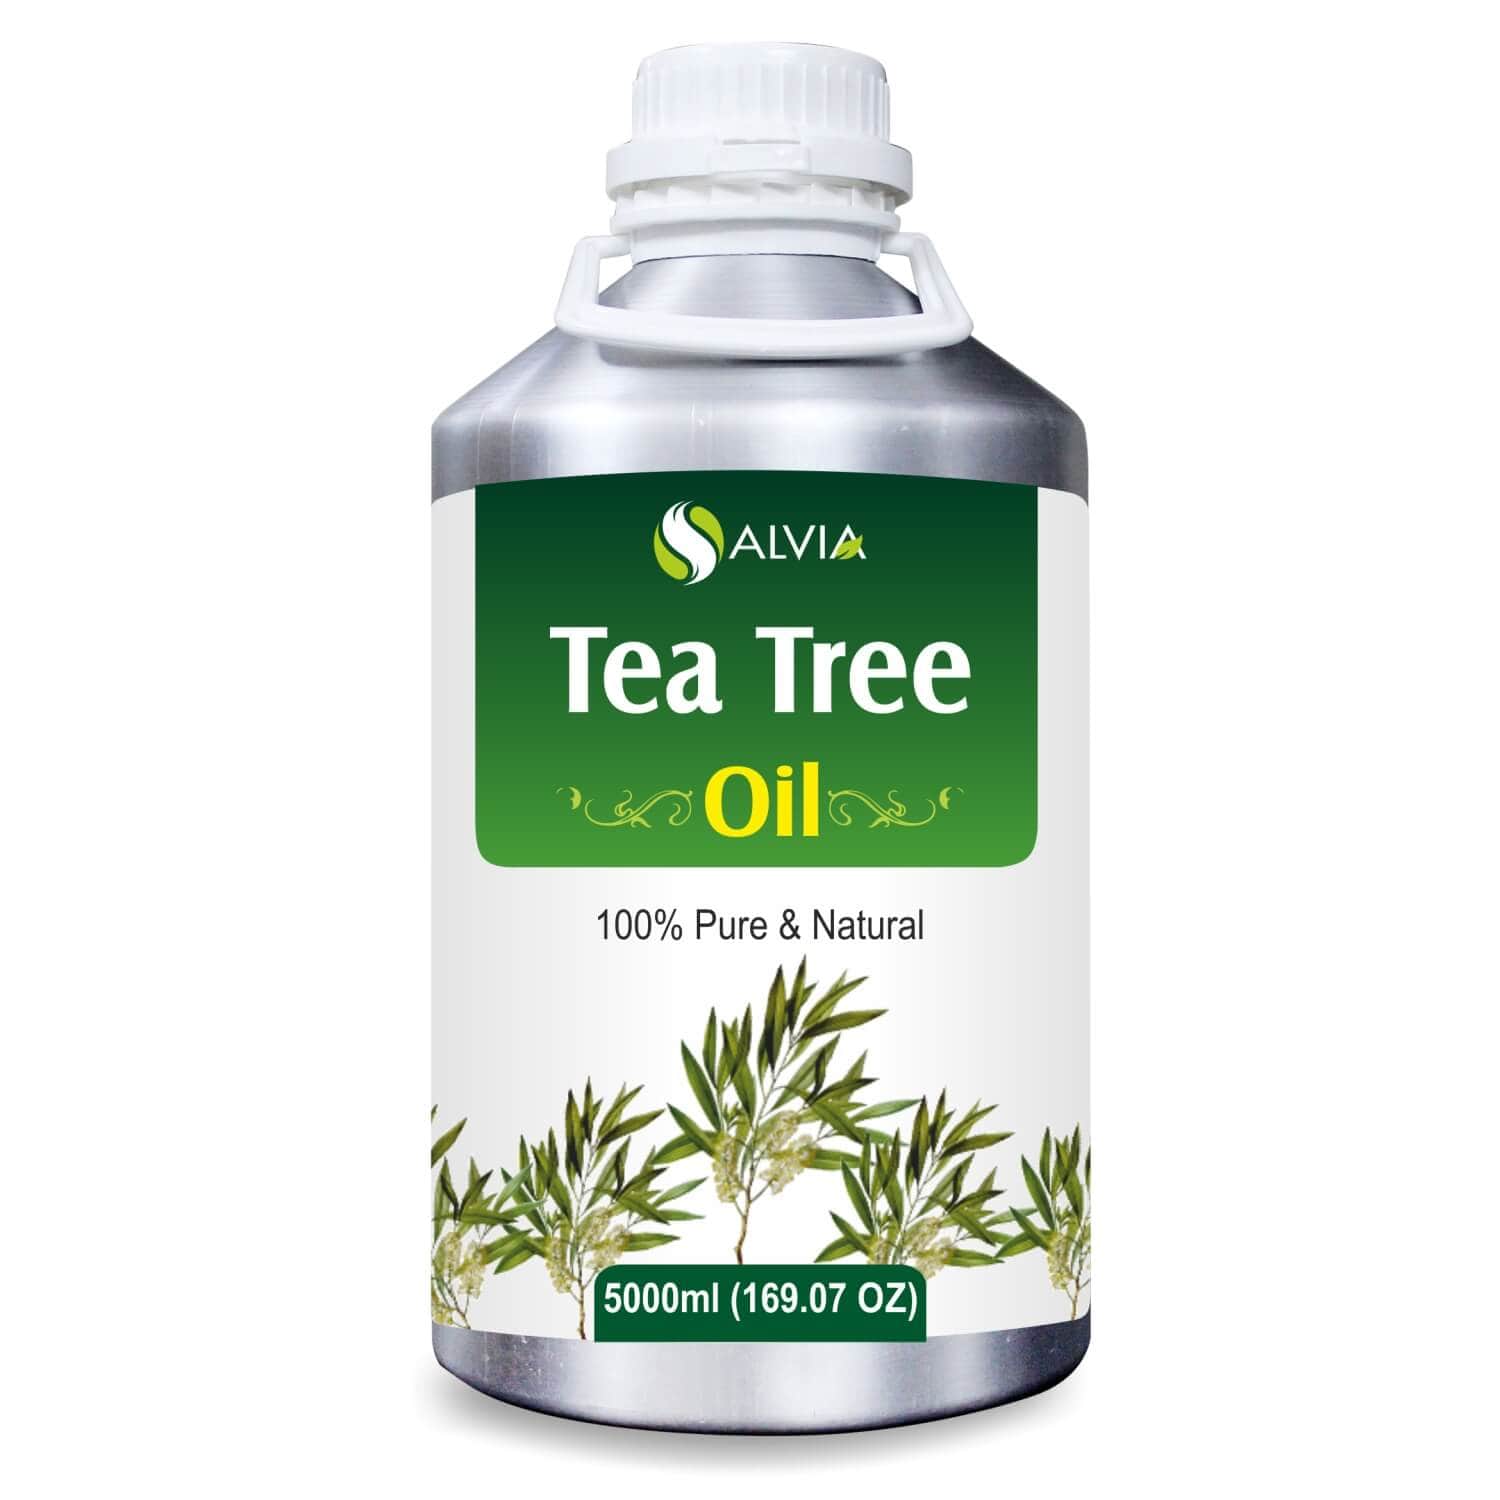 tea tree oil uses for skin